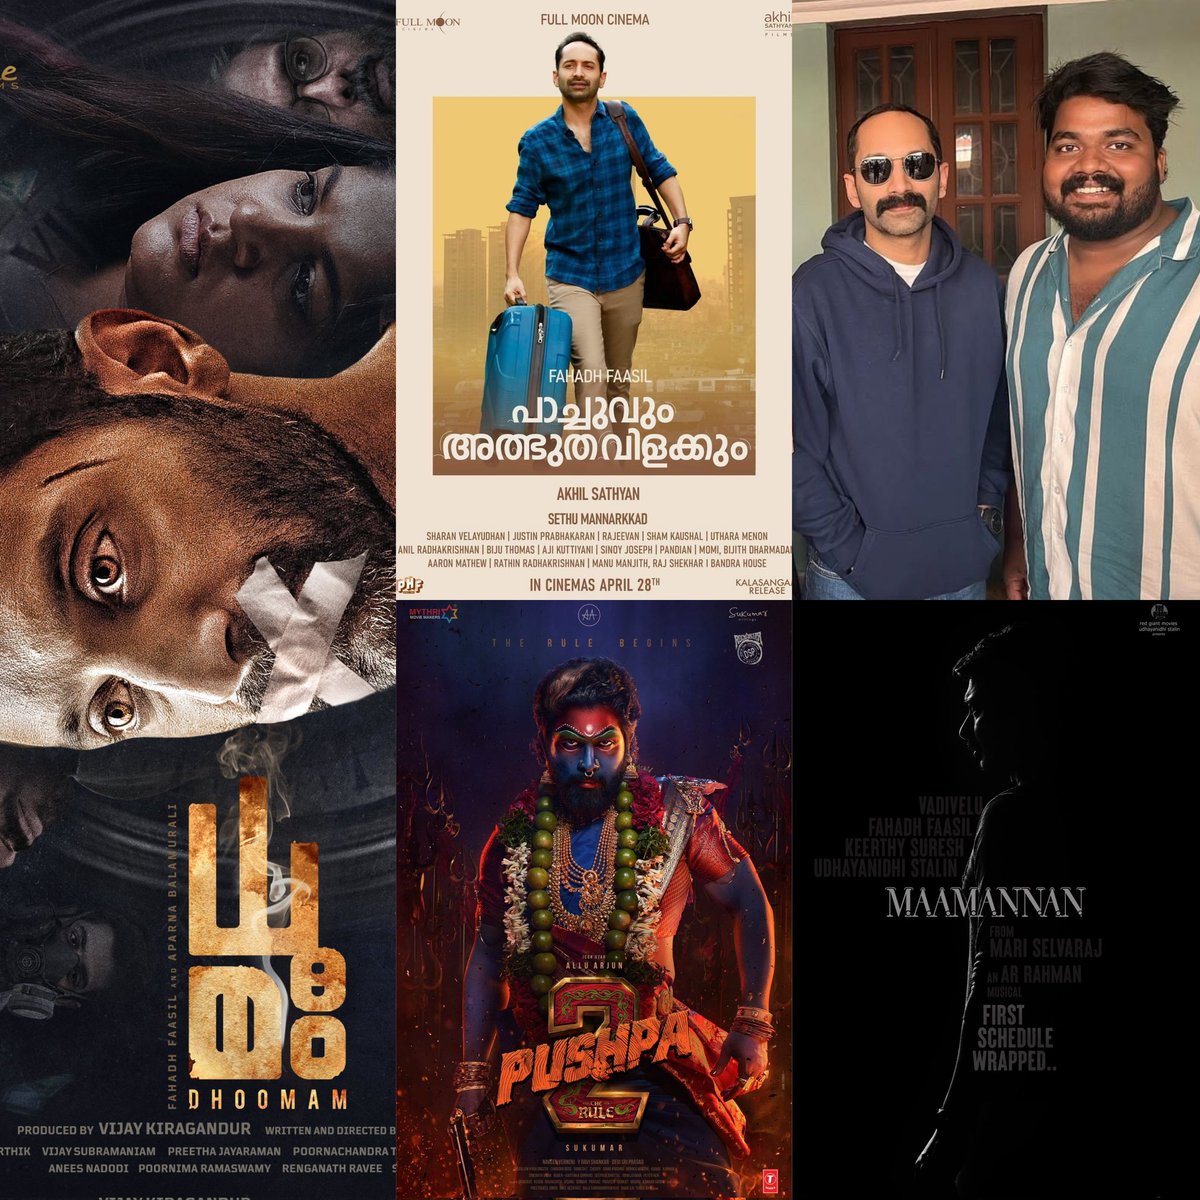 #FahadhFaasil is coming up with 

1. #PachuvumAthbhuthaVilakkum
2. #HombaleFilms movie #Dhoomam
3. #JithuMadhavan (Romancham Director) movie
4. #PushpaTheRule
5. #Maamannan directed by Mari Selvaraj 

FaFa upcoming movies 🔥 PROMISING.